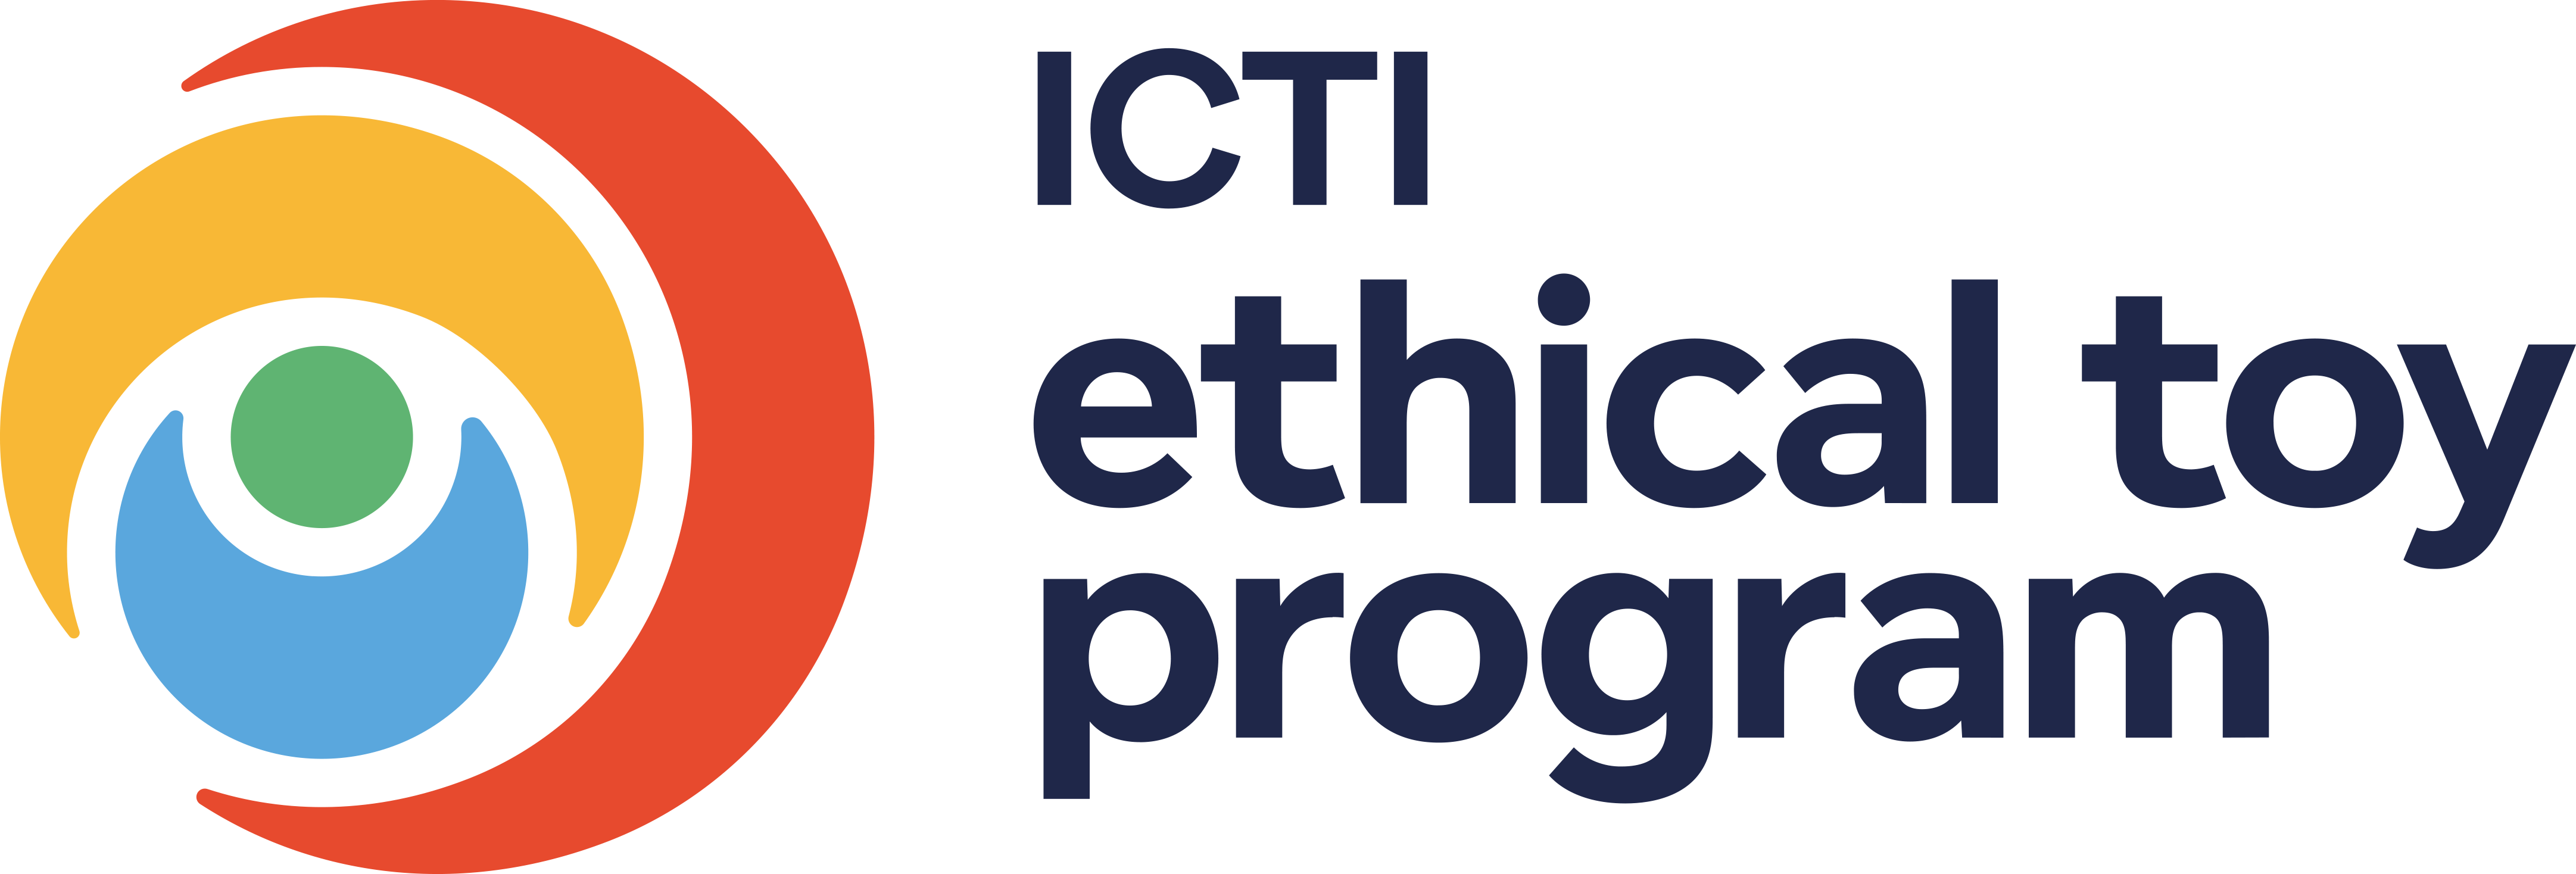 ICTI Ethical Program